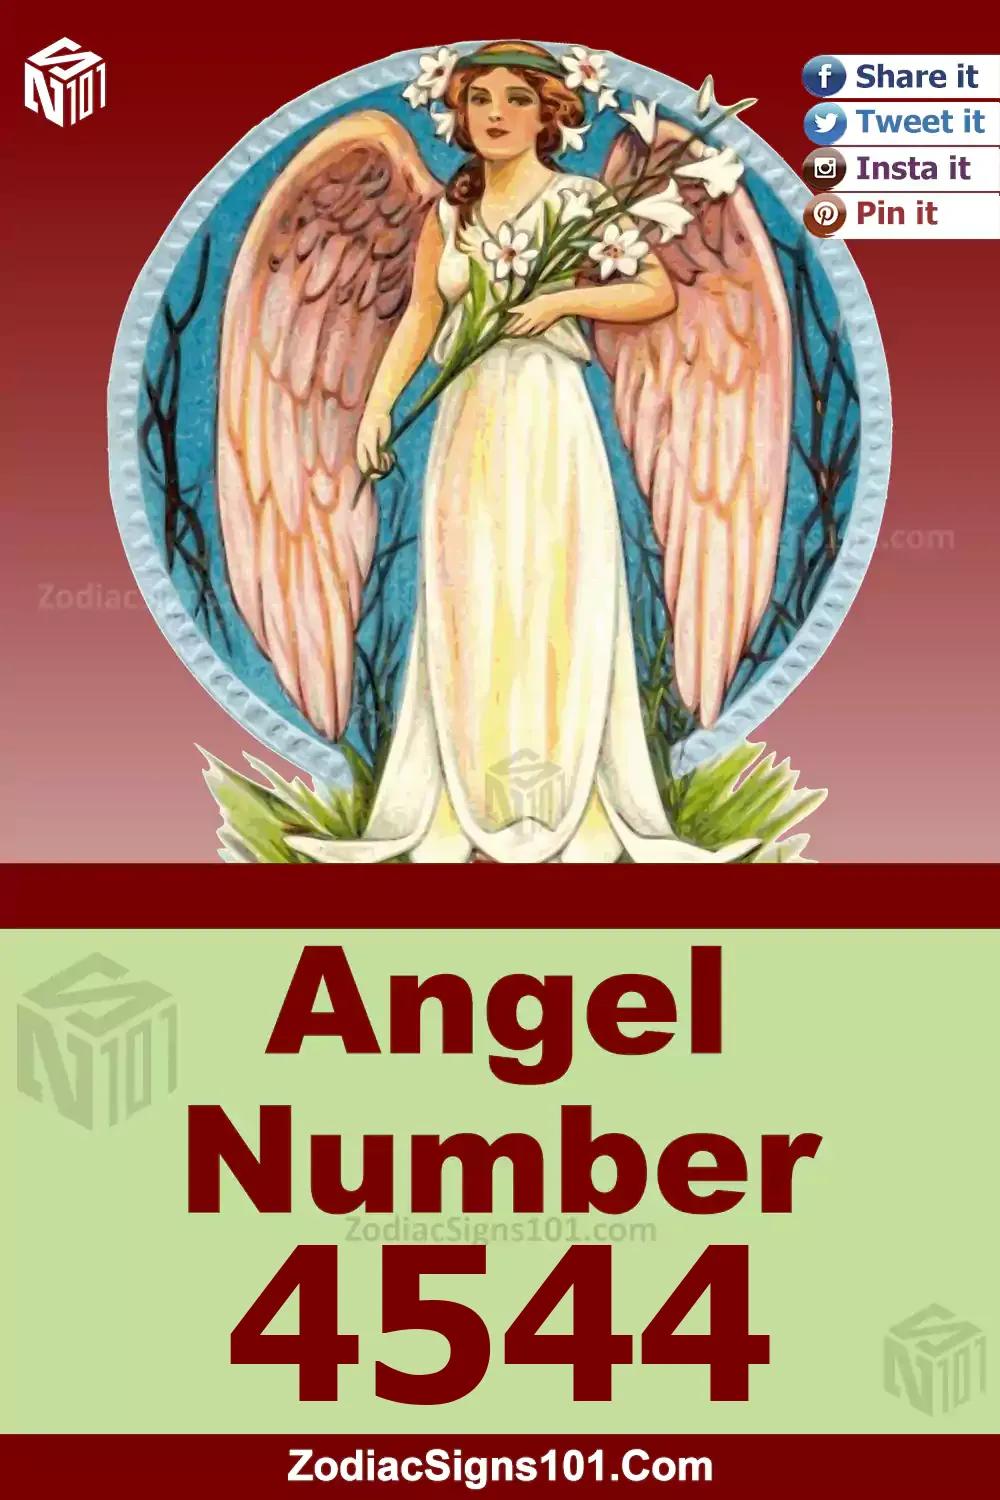 4544-Angel-Number-Meaning.jpg